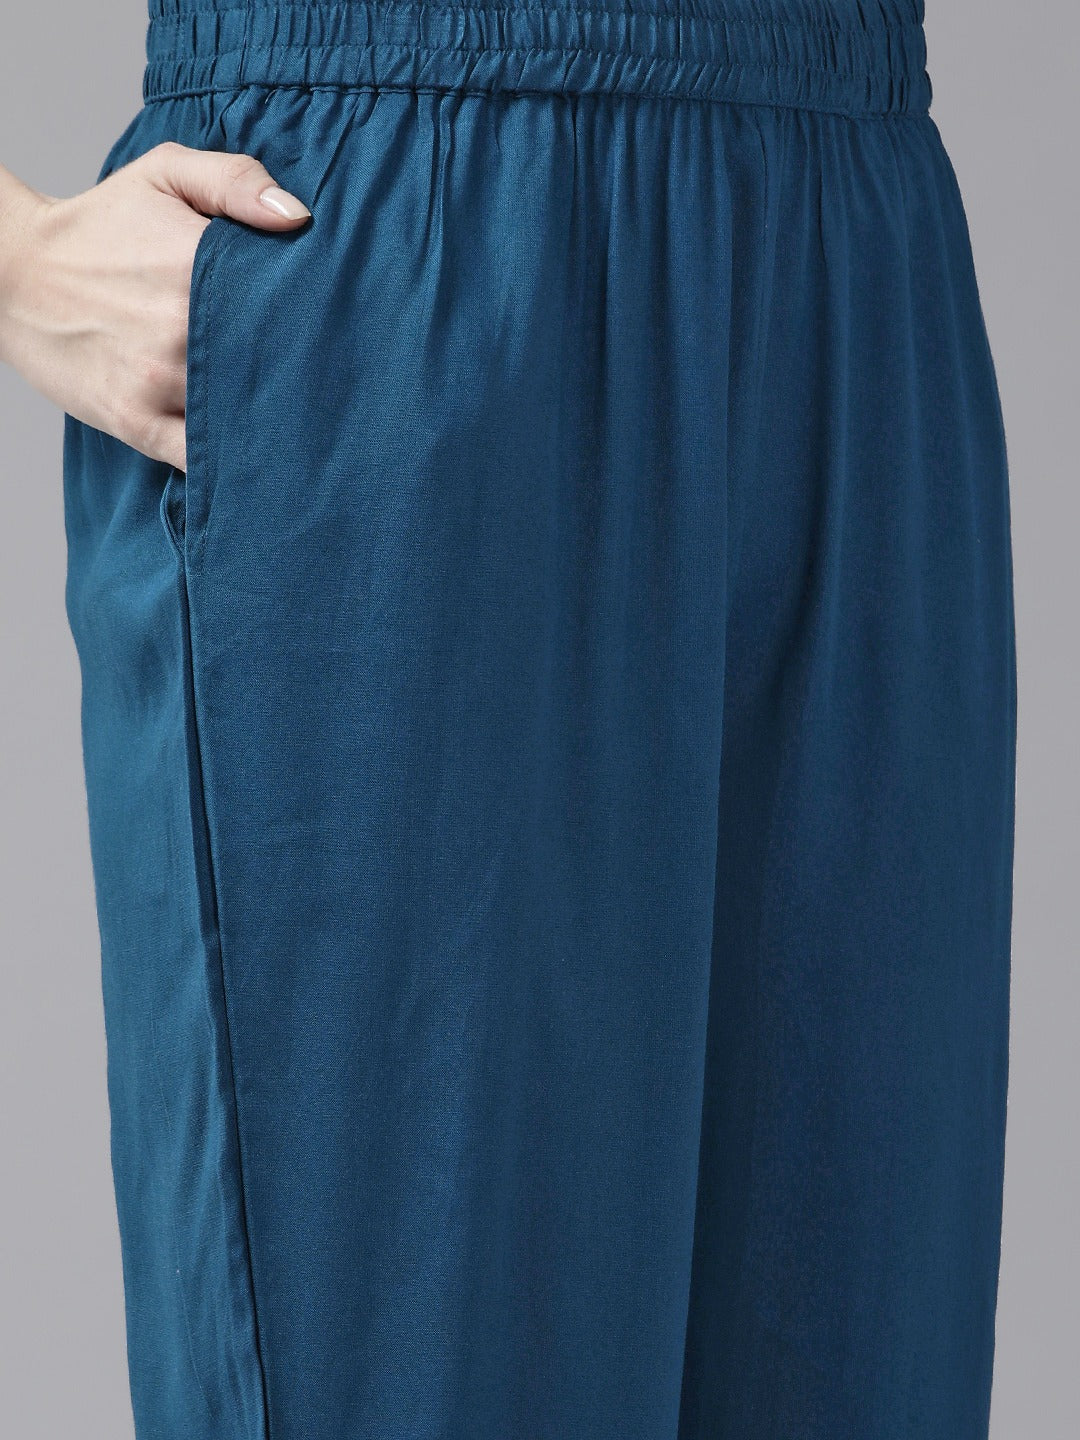 Women's Blue Golden Print Straight Kurta Trousers And Dupatta Set - Yufta